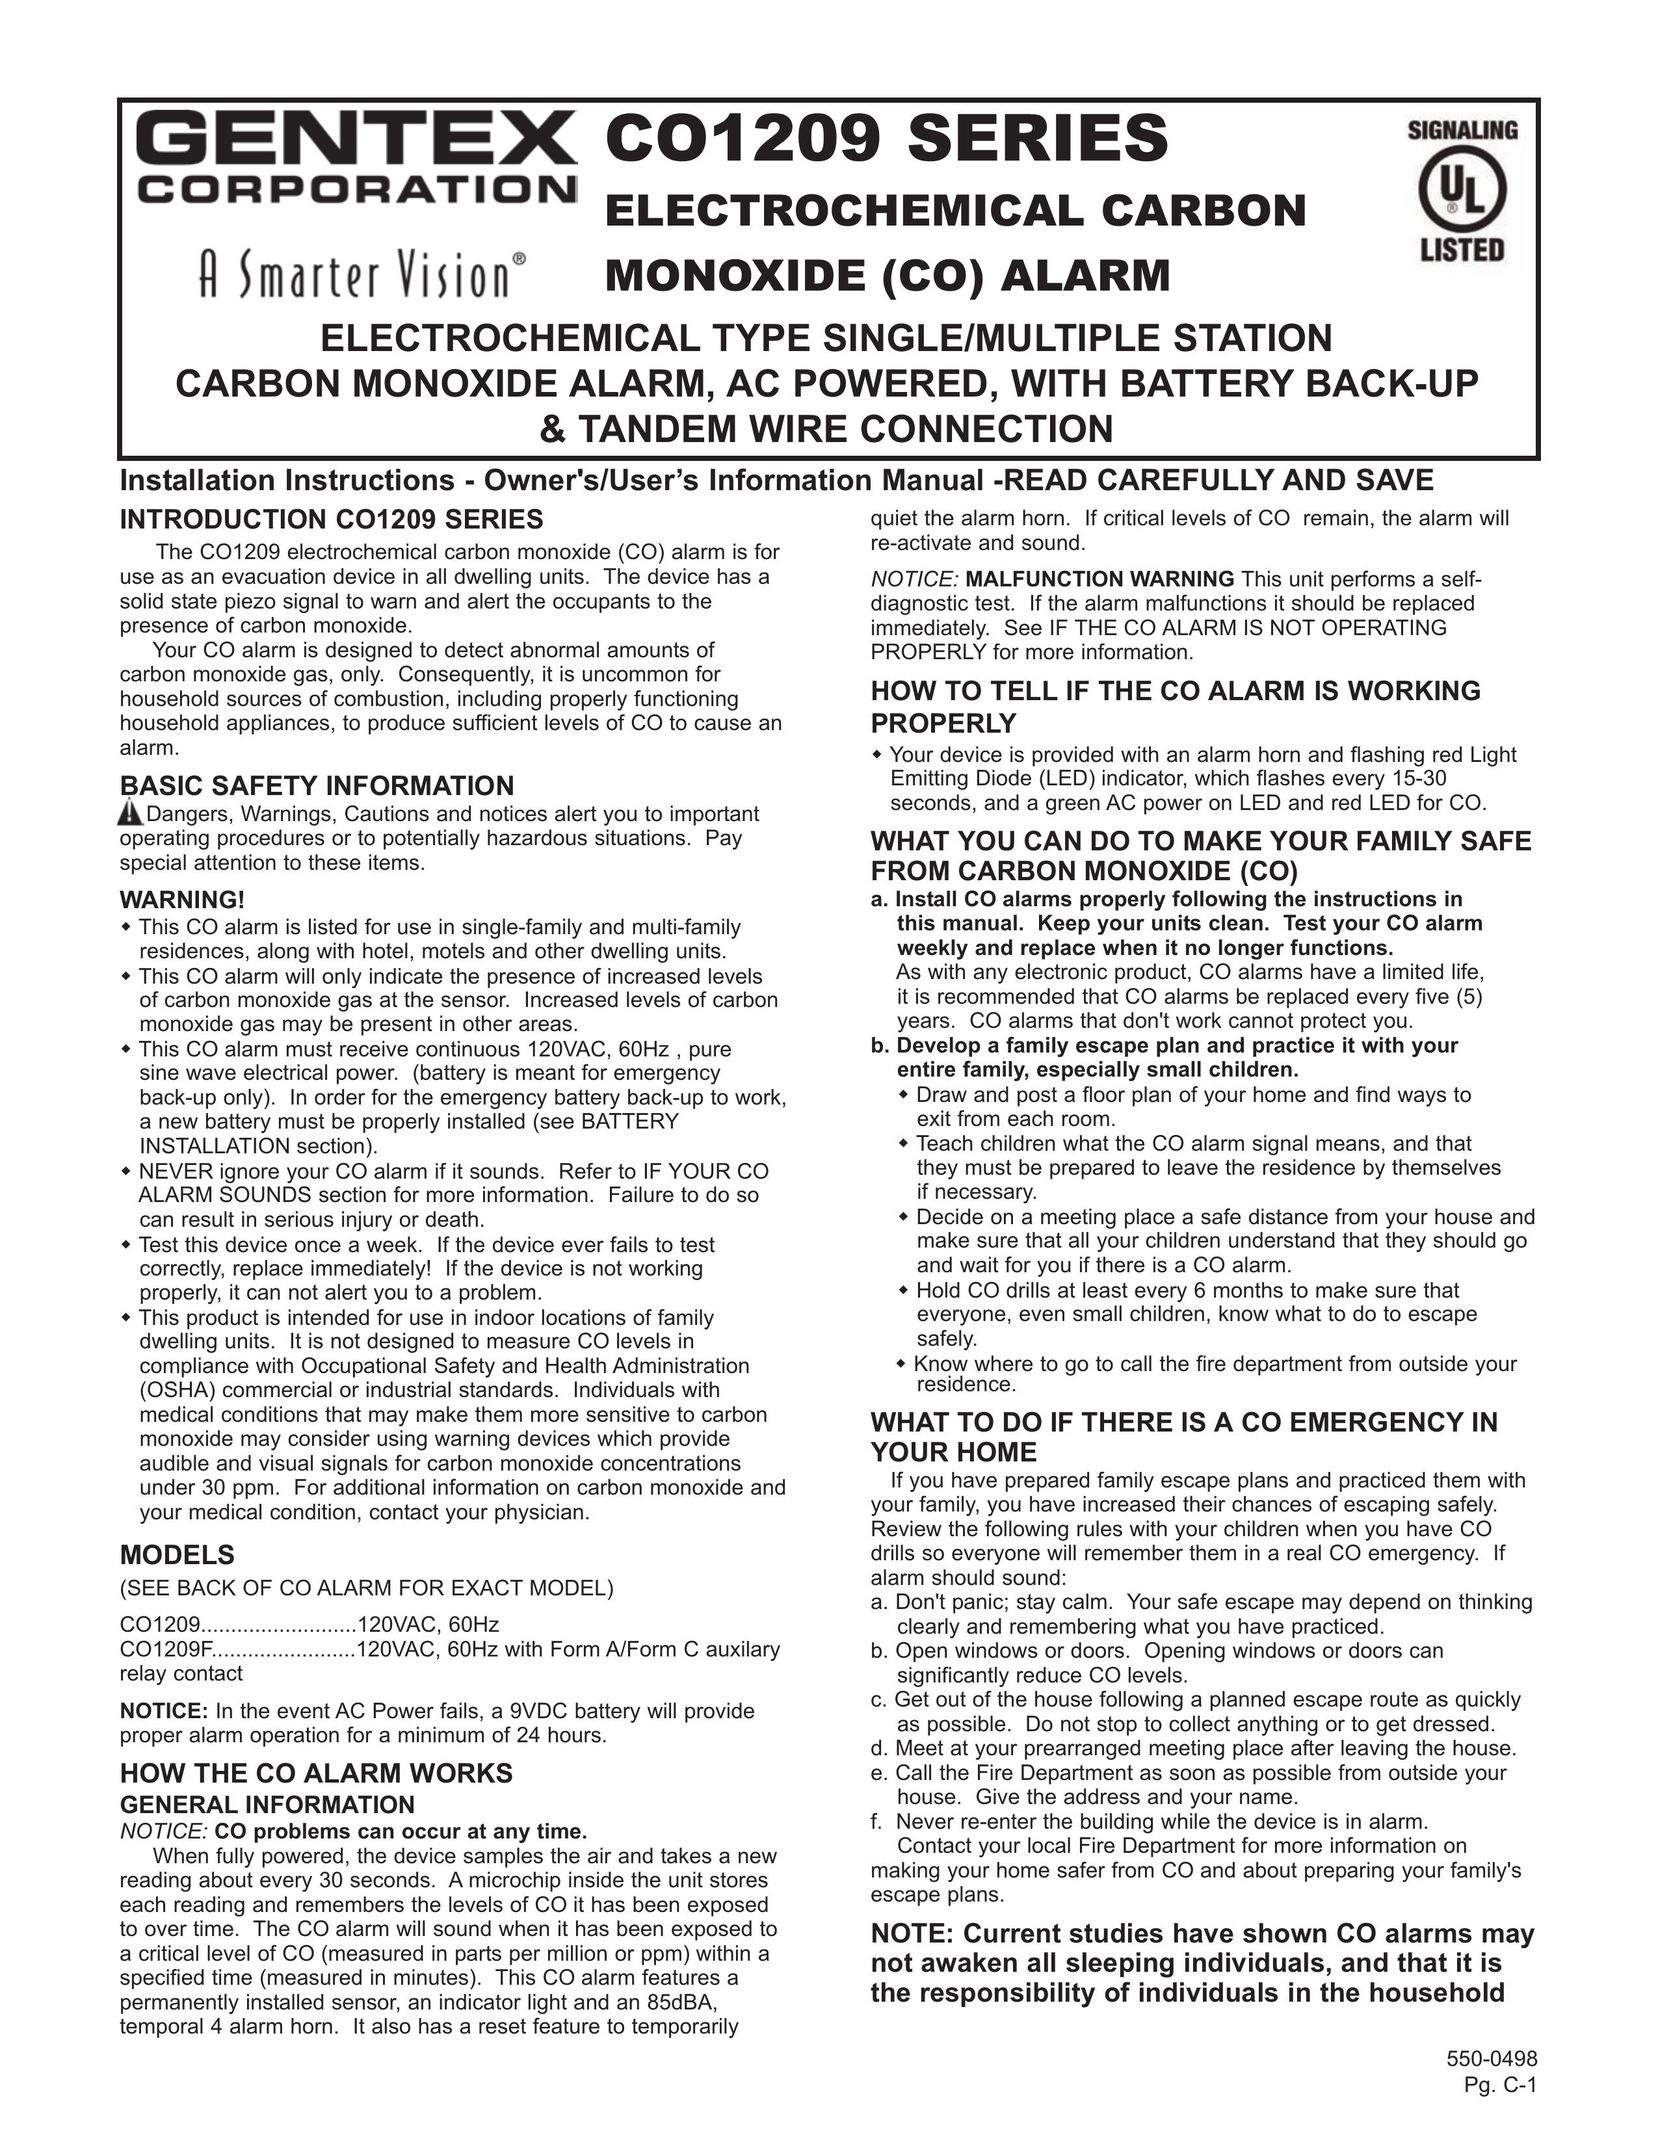 Gentek CO1209 Carbon Monoxide Alarm User Manual